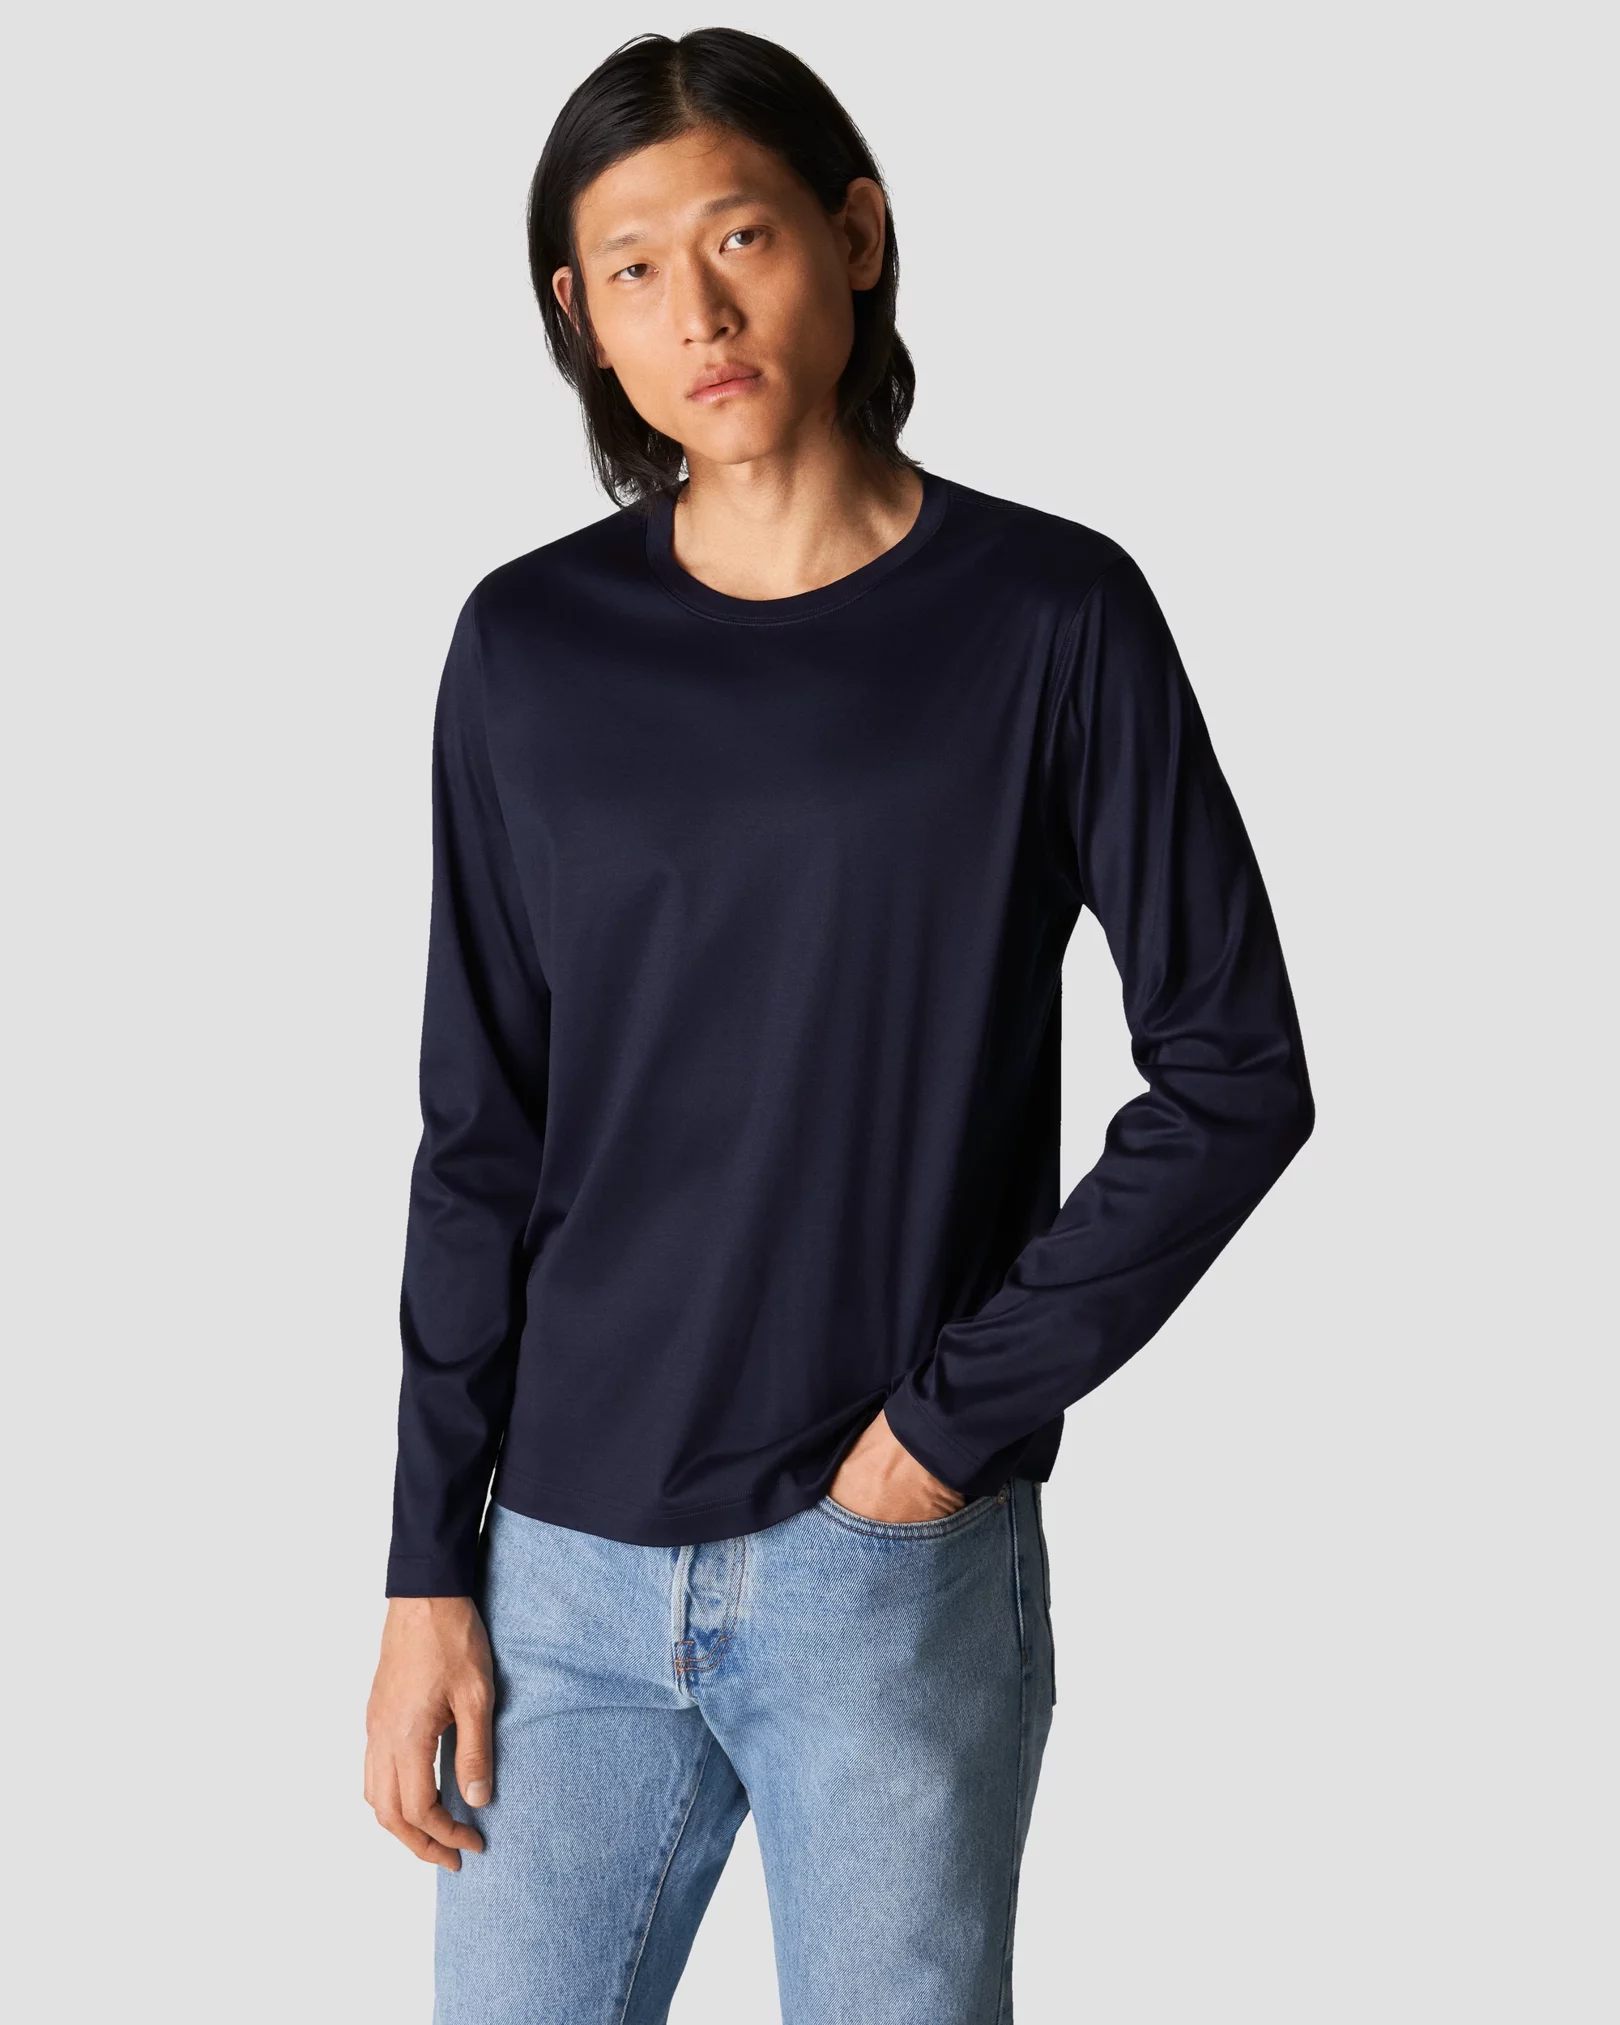 Eton - navy blue jersey t shirt long sleeve